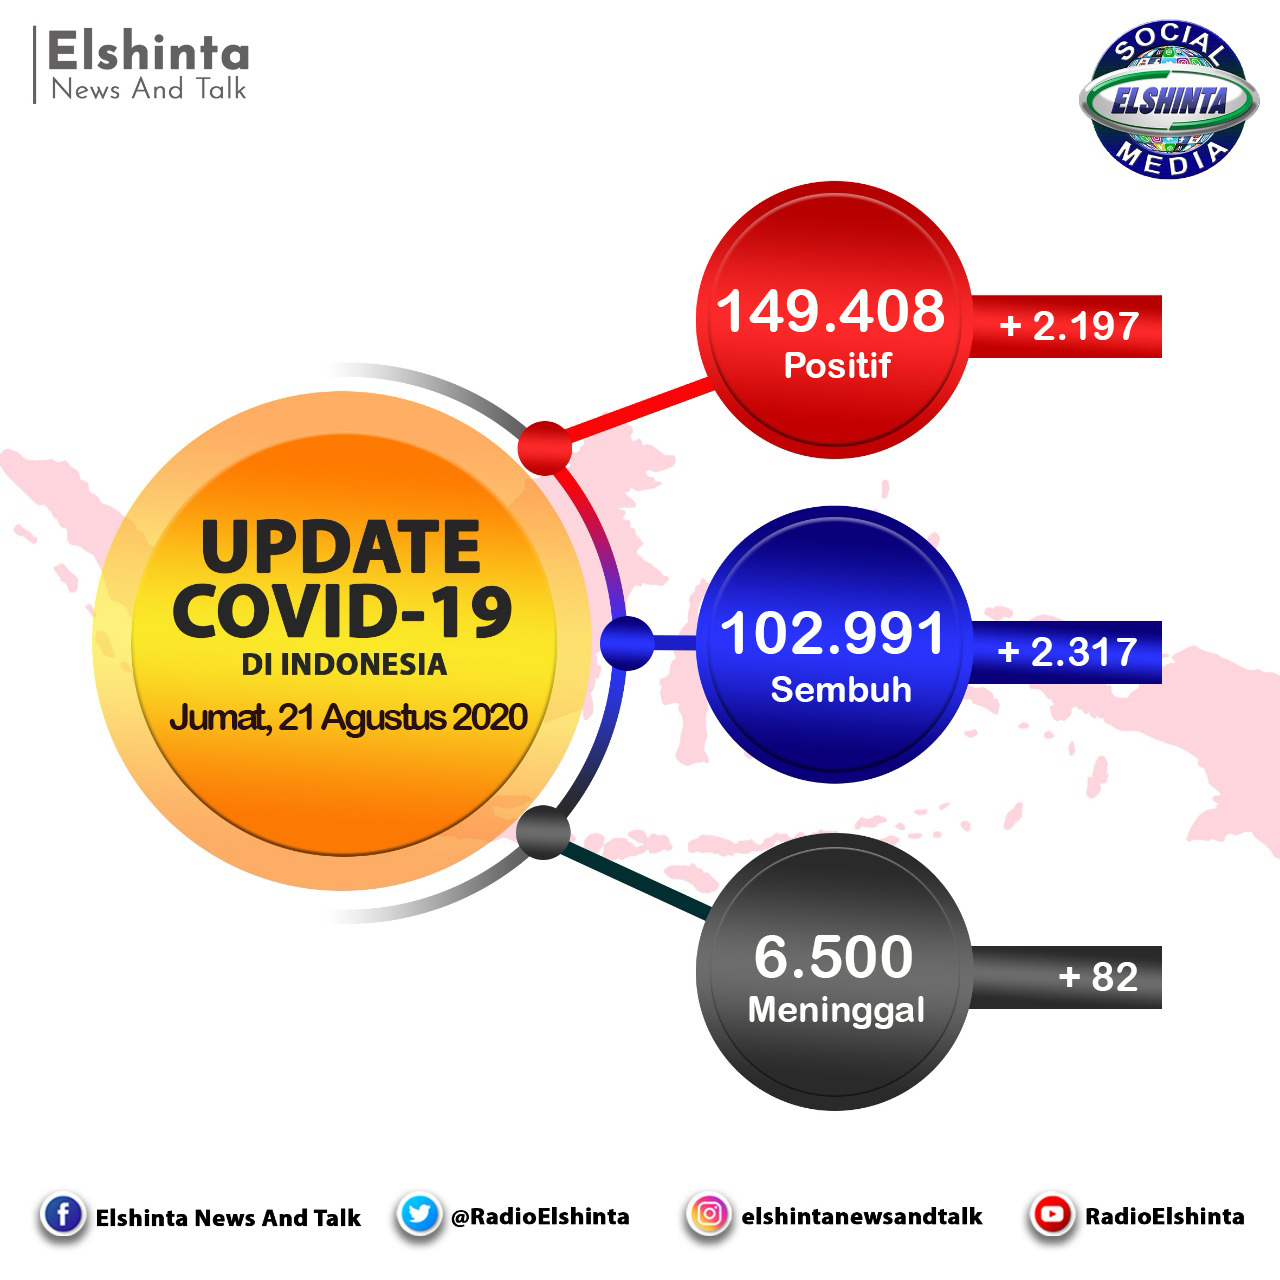 Revisi : Update COVID-19 di Indonesia, Jumat 21 Agustus 2020. Positif: 149.408 (+2.197) Sembuh: 102.991 (+2.317) Meninggal: 6.500 (+82) *sumber: covid19.go.id